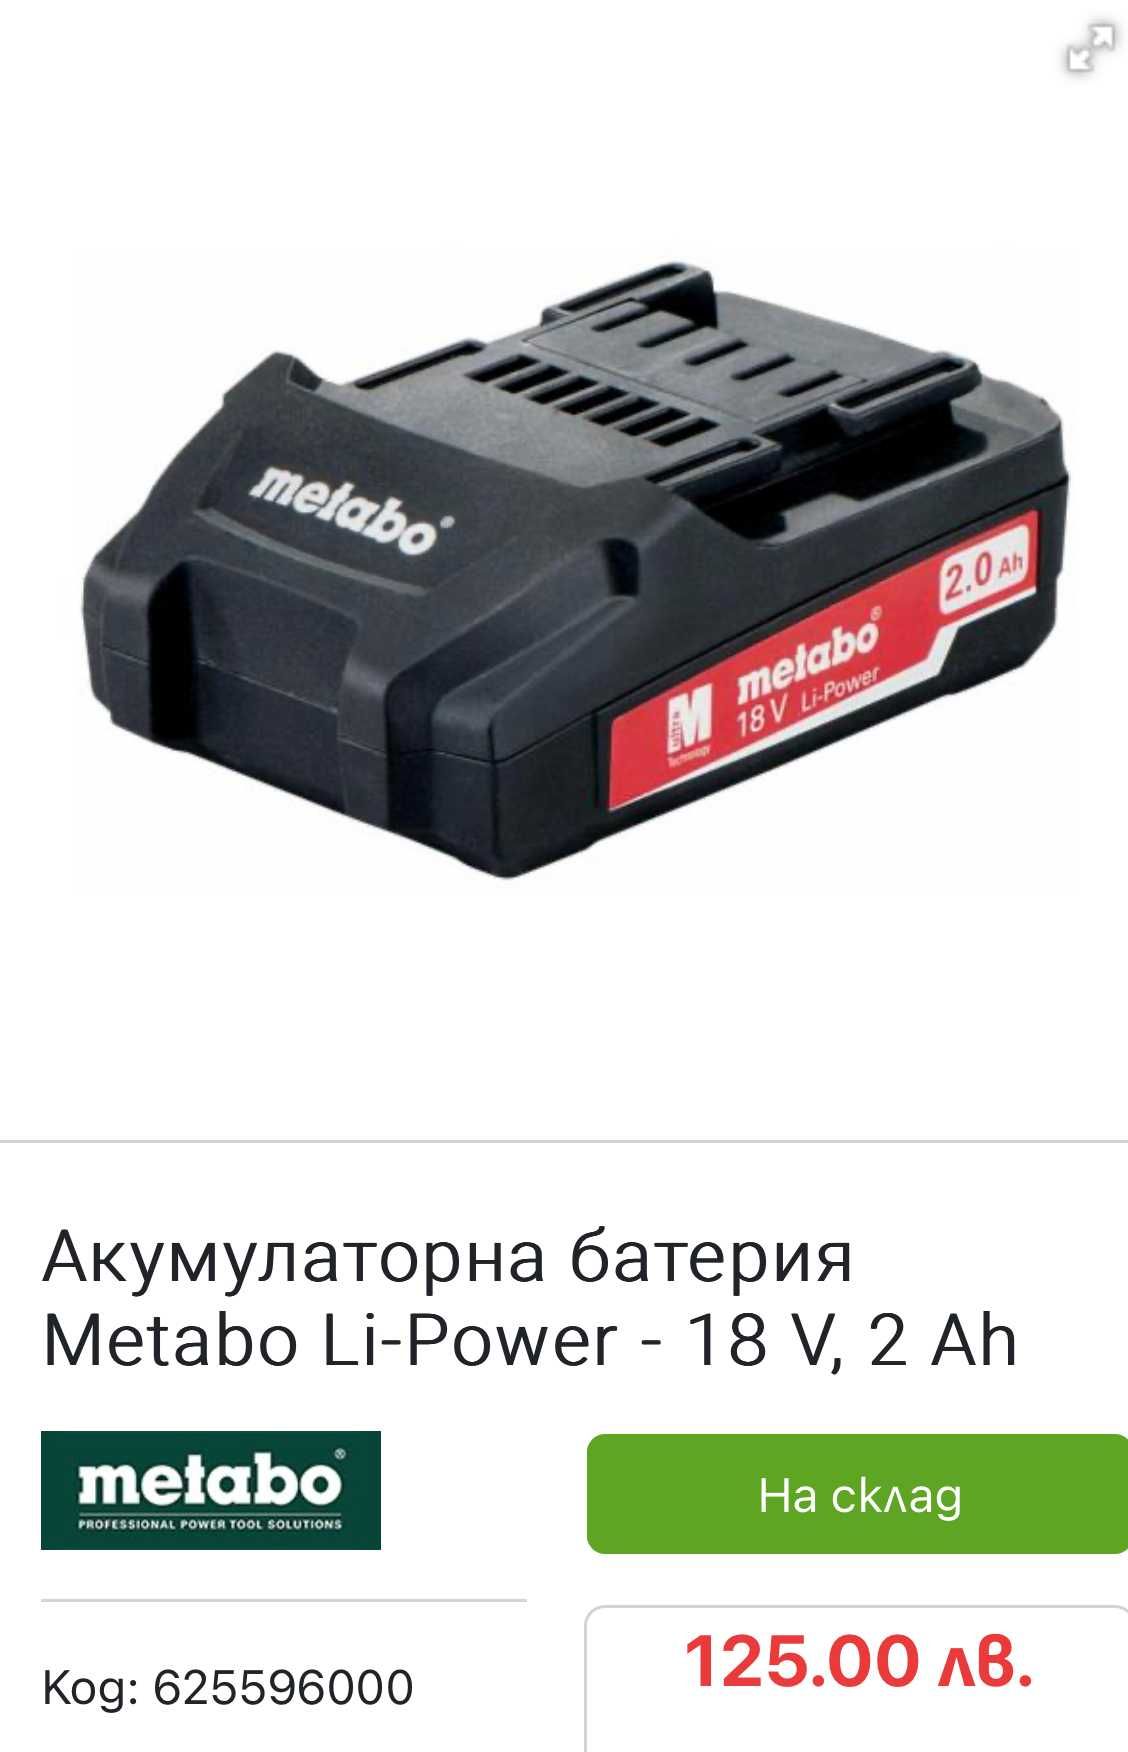 Metabo SC 60 Plus & Metabo 18V 2.0Ah - Зарядно и акумулаторна батерия